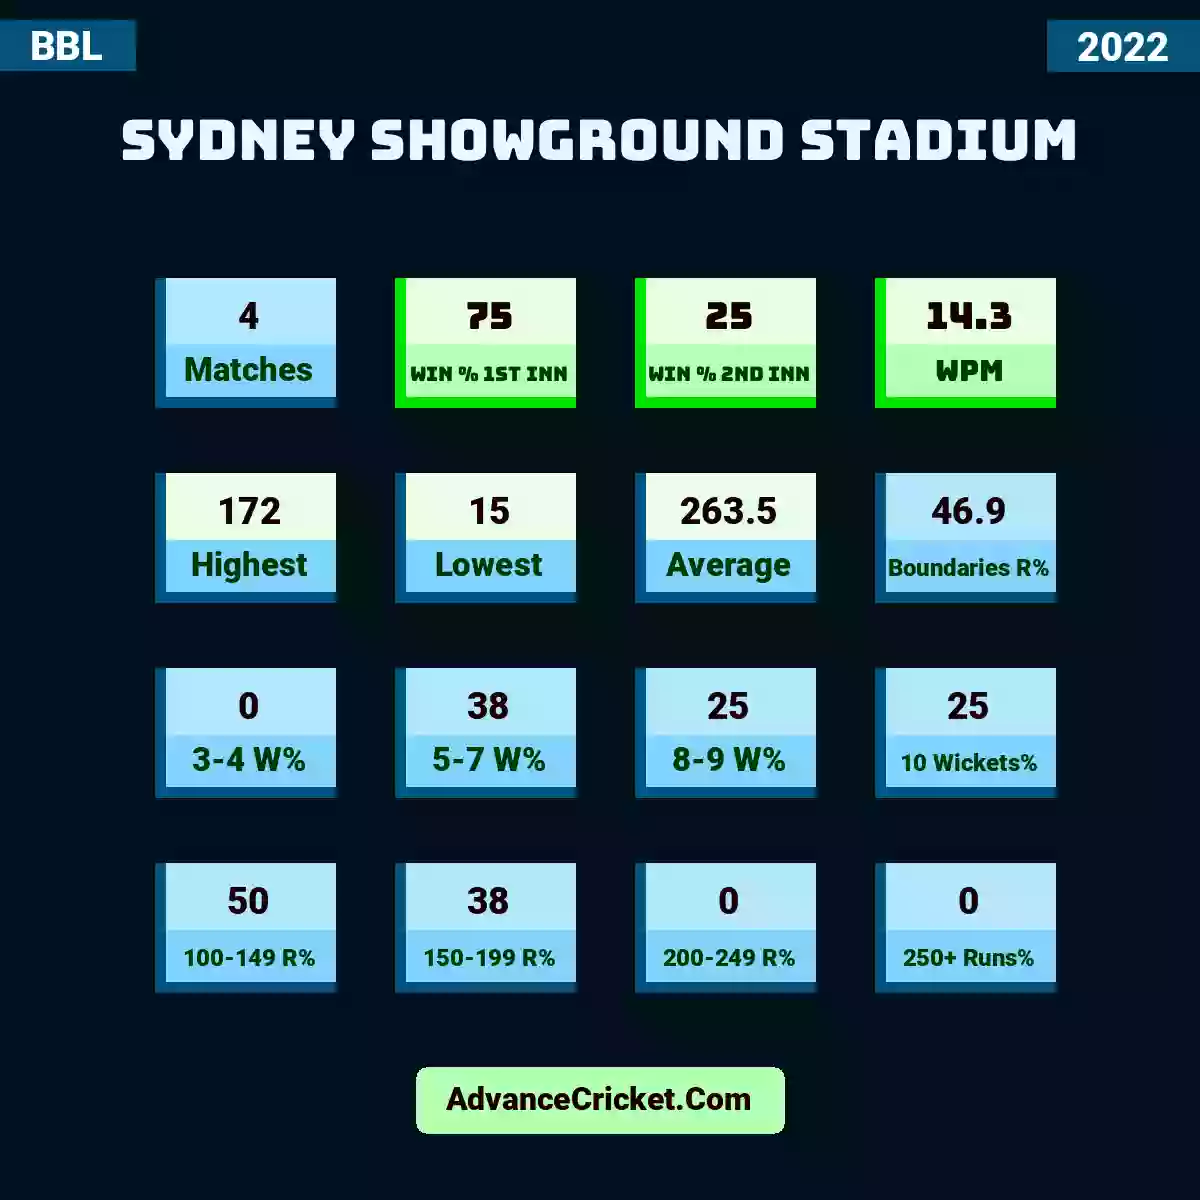 Image showing Sydney Showground Stadium with Matches: 4, Win % 1st Inn: 75, Win % 2nd Inn: 25, WPM: 14.3, Highest: 172, Lowest: 15, Average: 263.5, Boundaries R%: 46.9, 3-4 W%: 0, 5-7 W%: 38, 8-9 W%: 25, 10 Wickets%: 25, 100-149 R%: 50, 150-199 R%: 38, 200-249 R%: 0, 250+ Runs%: 0.